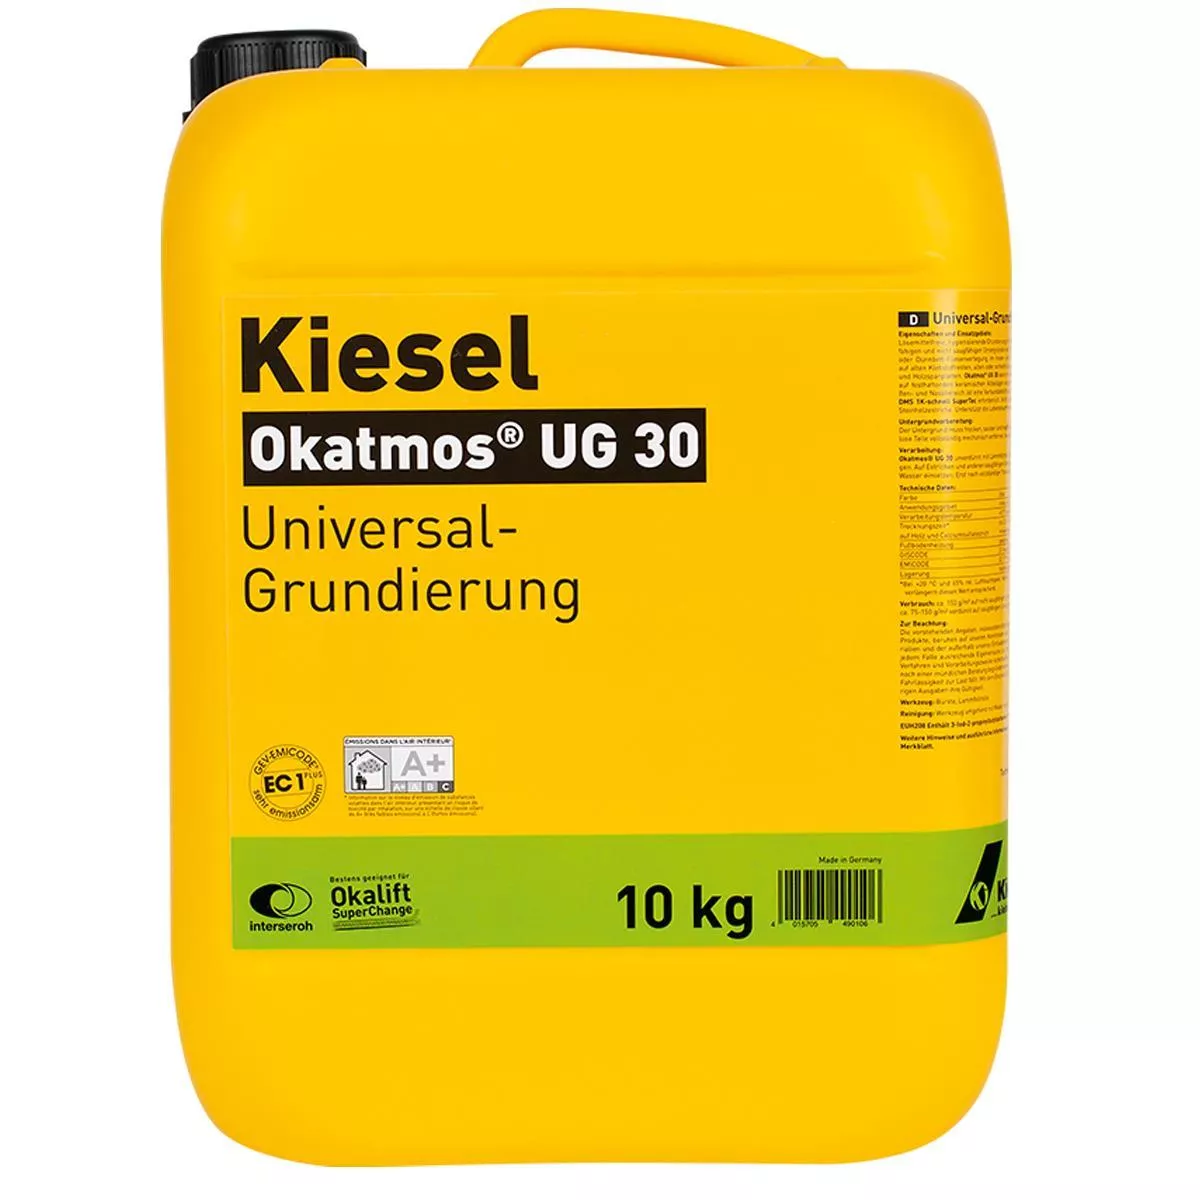 Universal Grundierung Kiesel Okatmos UG 30 Blau 10 kg